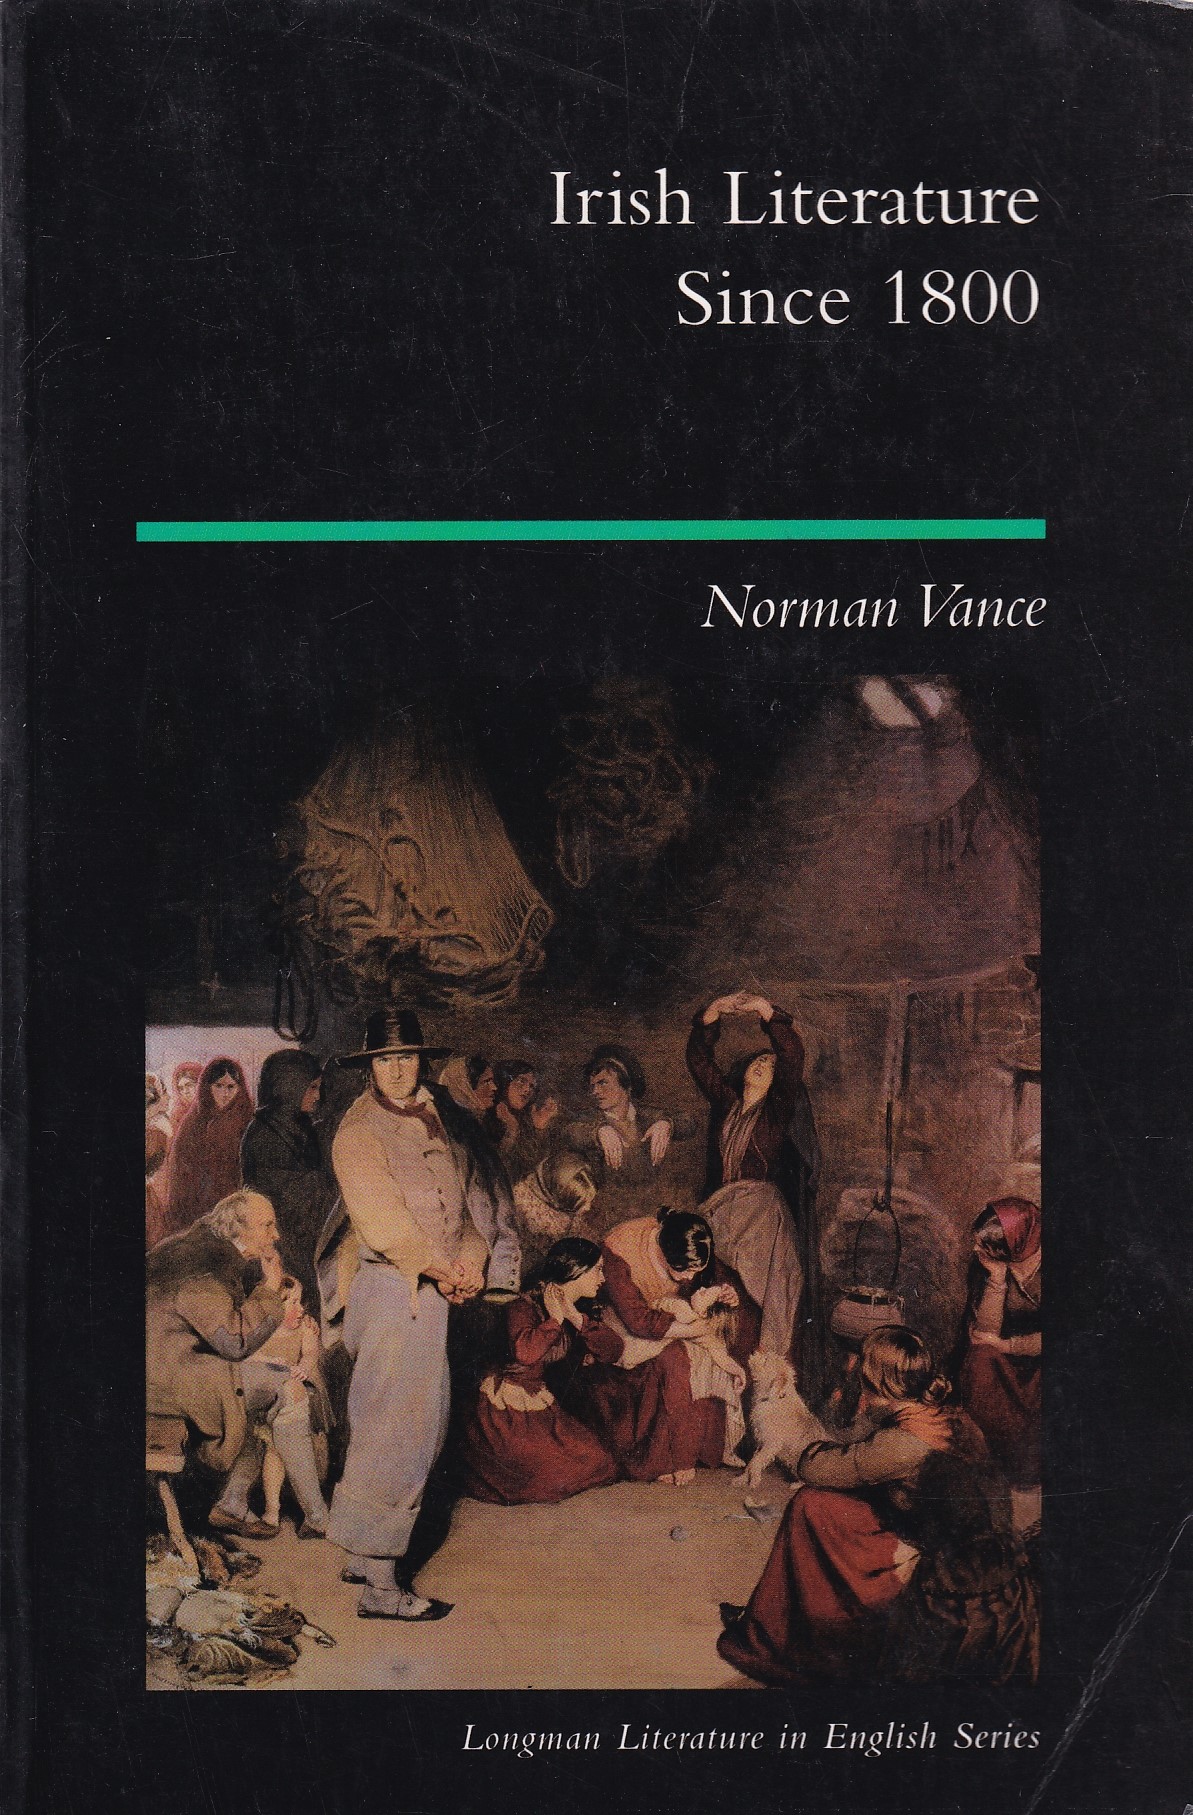 Irish Literature Since 1800 (Longman Literature in English Series) by Norman Vance